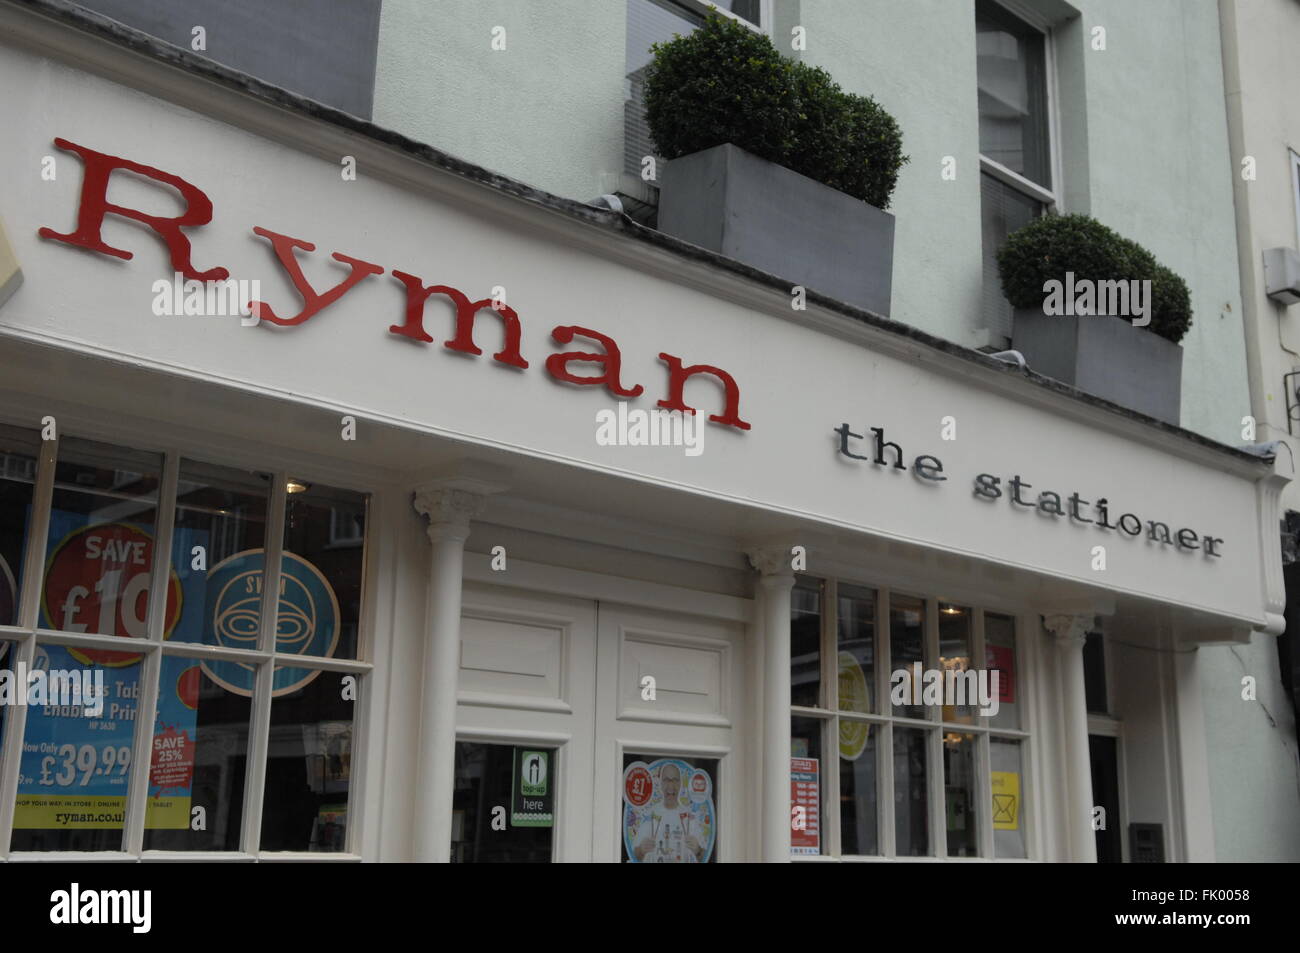 Ryman the stationers shop front in Shepherd Market London W1 UK. Stock Photo